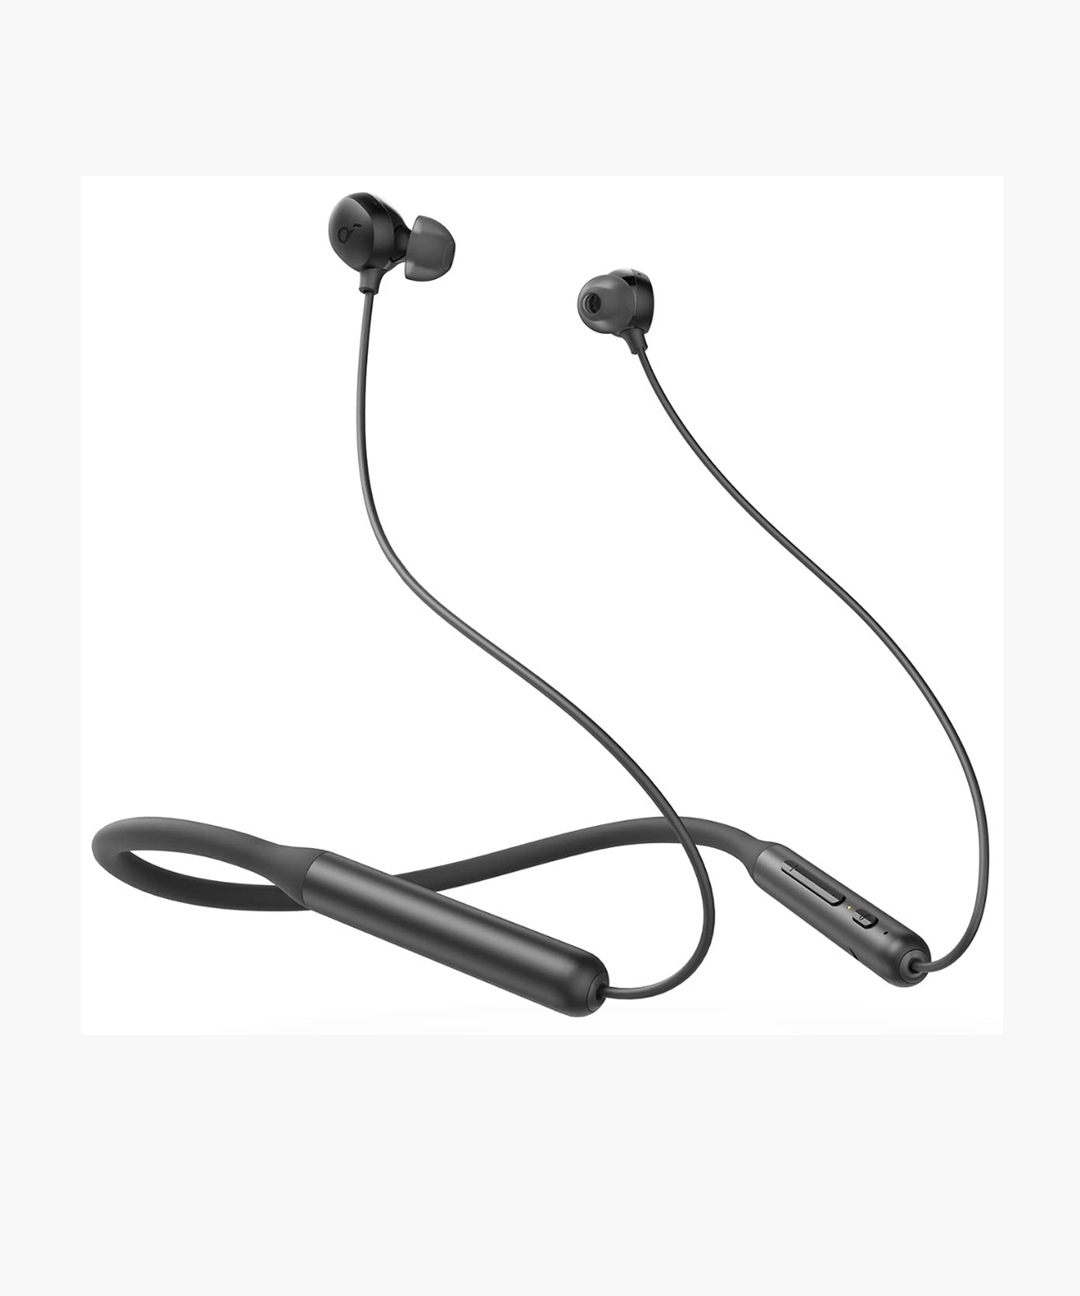 Original Anker Soundcore Life U2i Wireless Headphones – Black